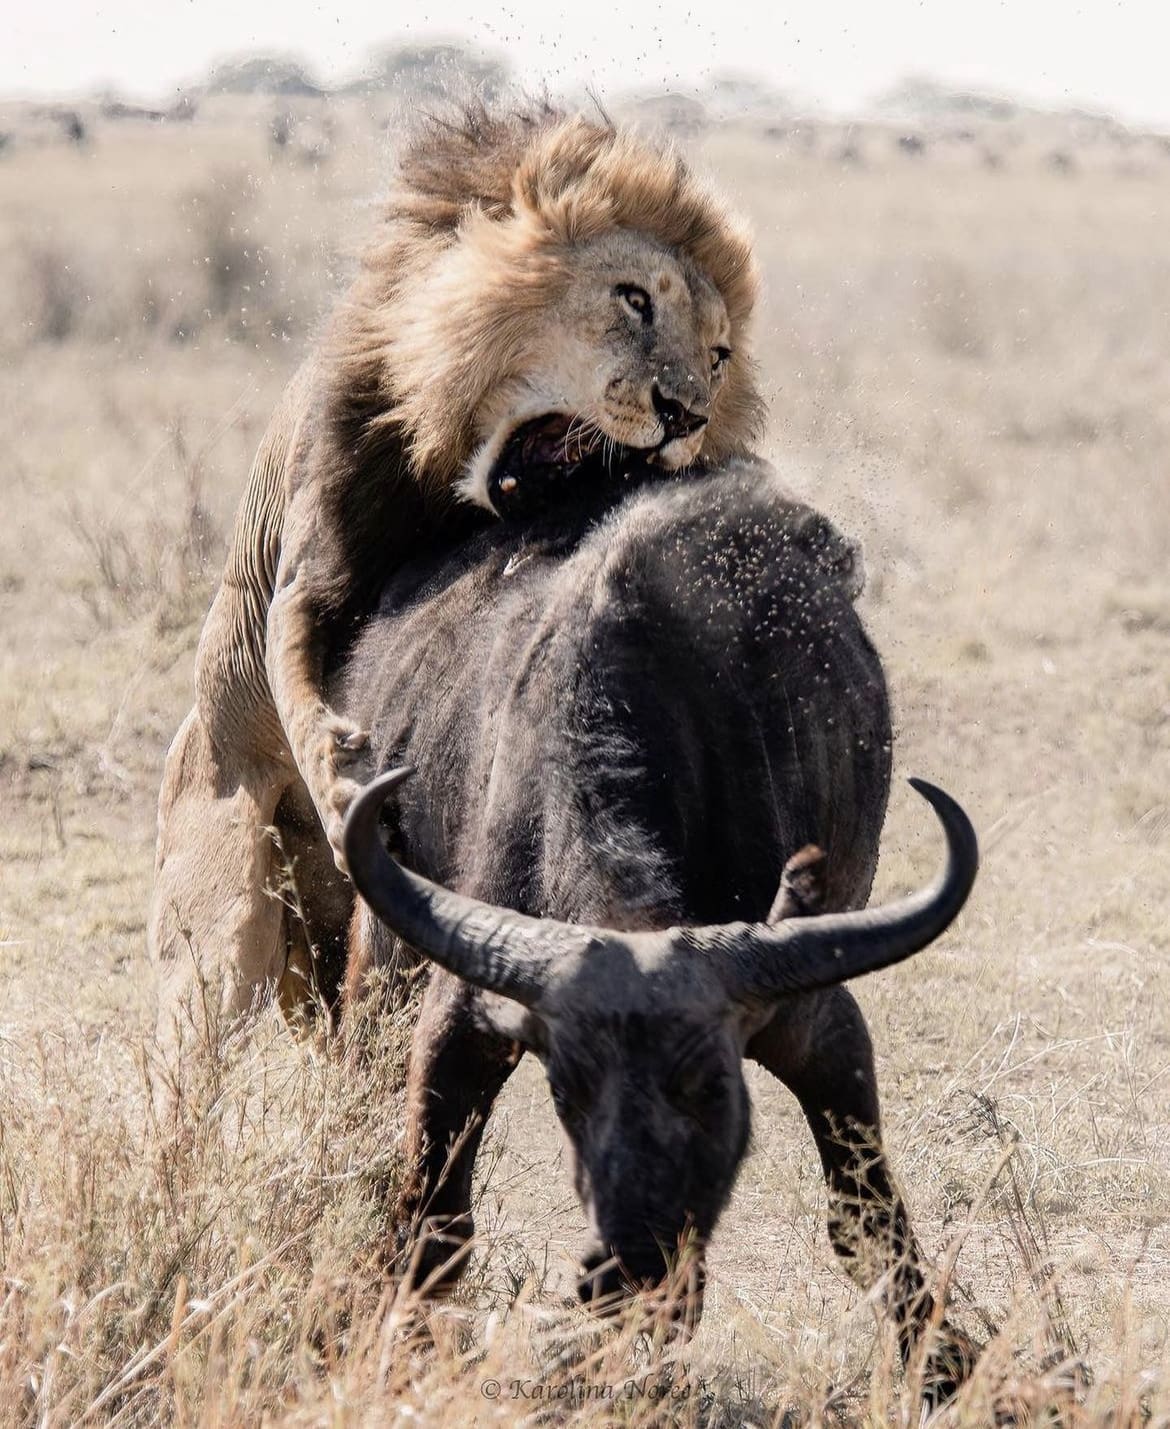 Male lion biting into buffalo